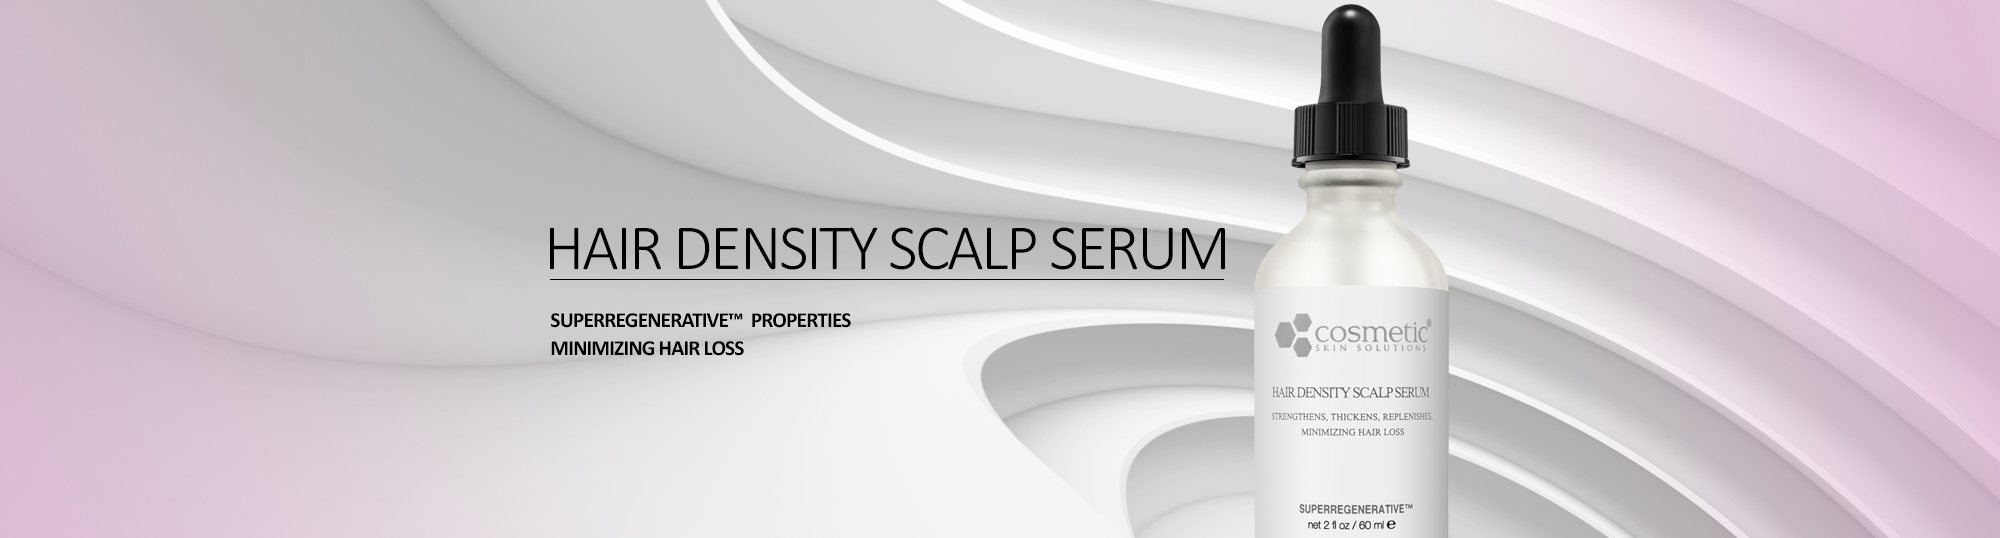 Hair Density Scalp Serum Banner